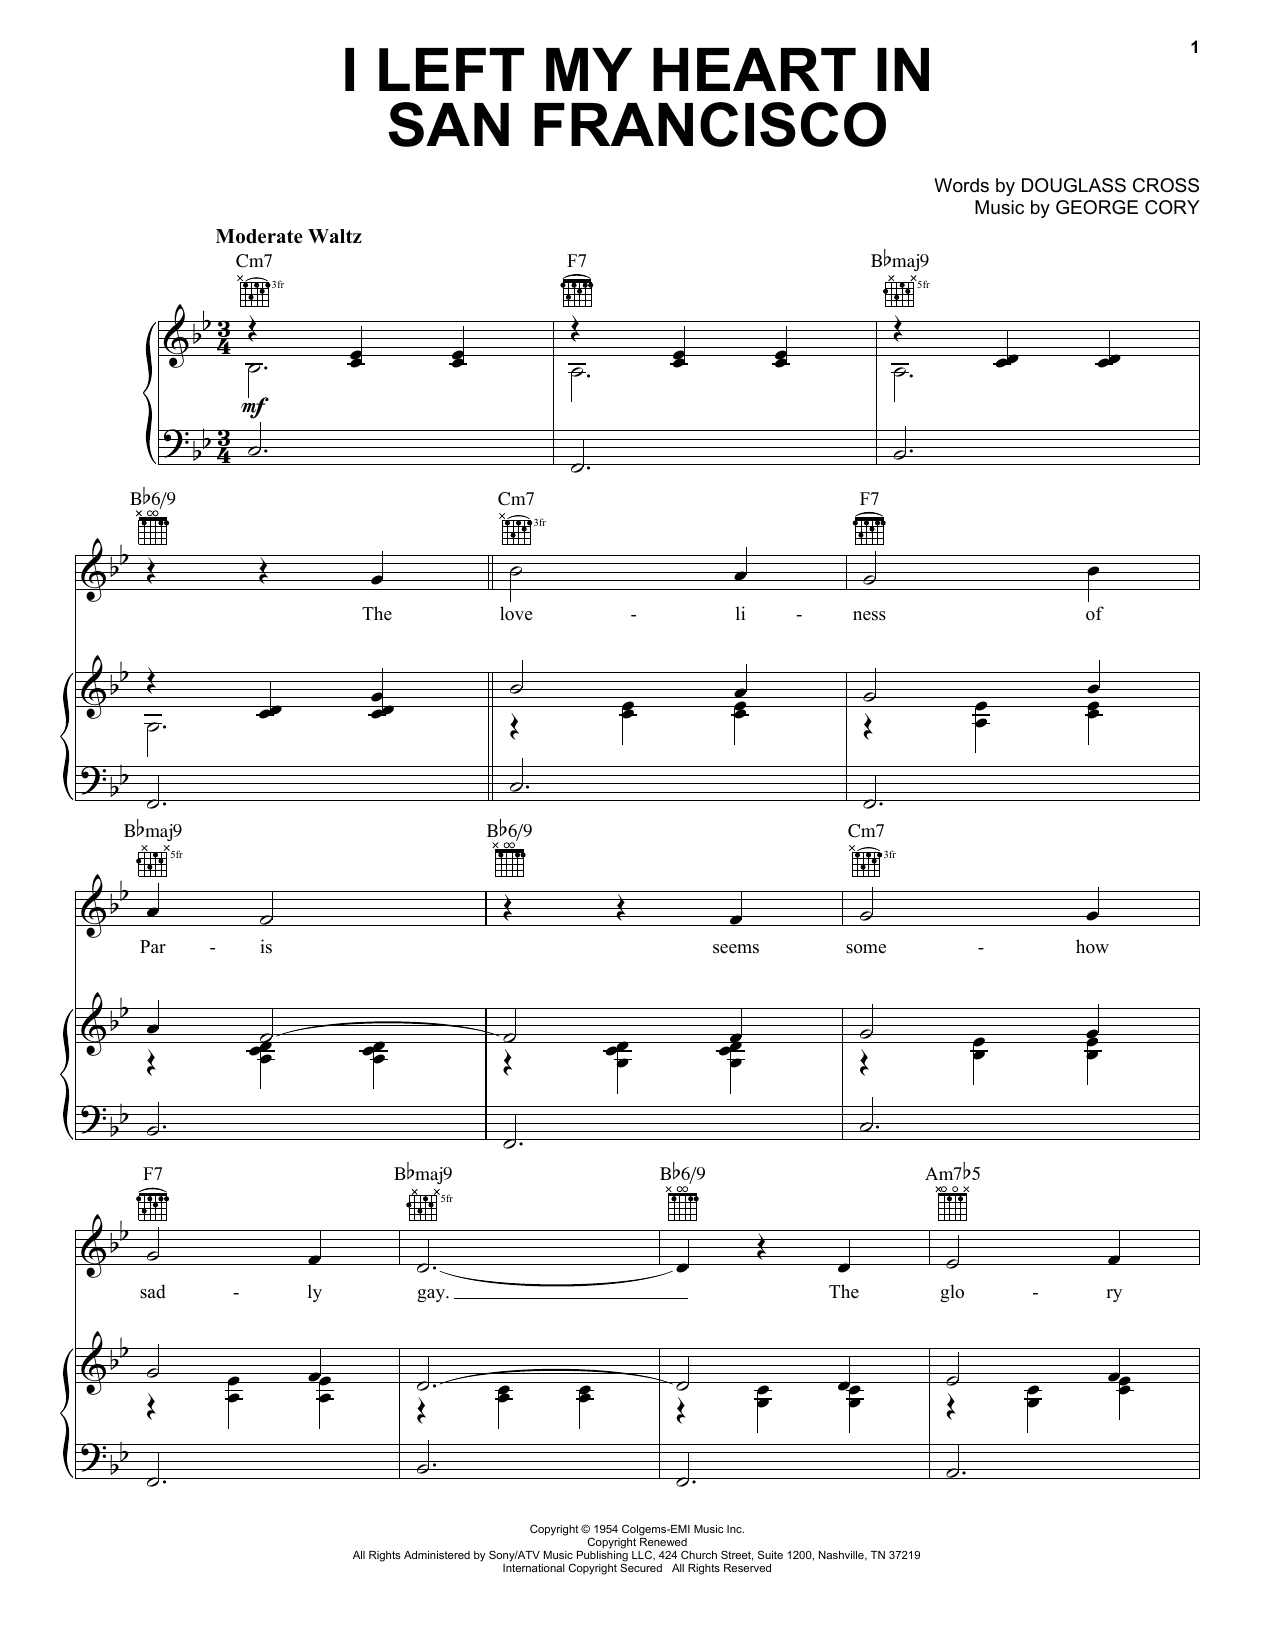 Tony Bennett I Left My Heart In San Francisco Sheet Music Notes & Chords for Ukulele - Download or Print PDF